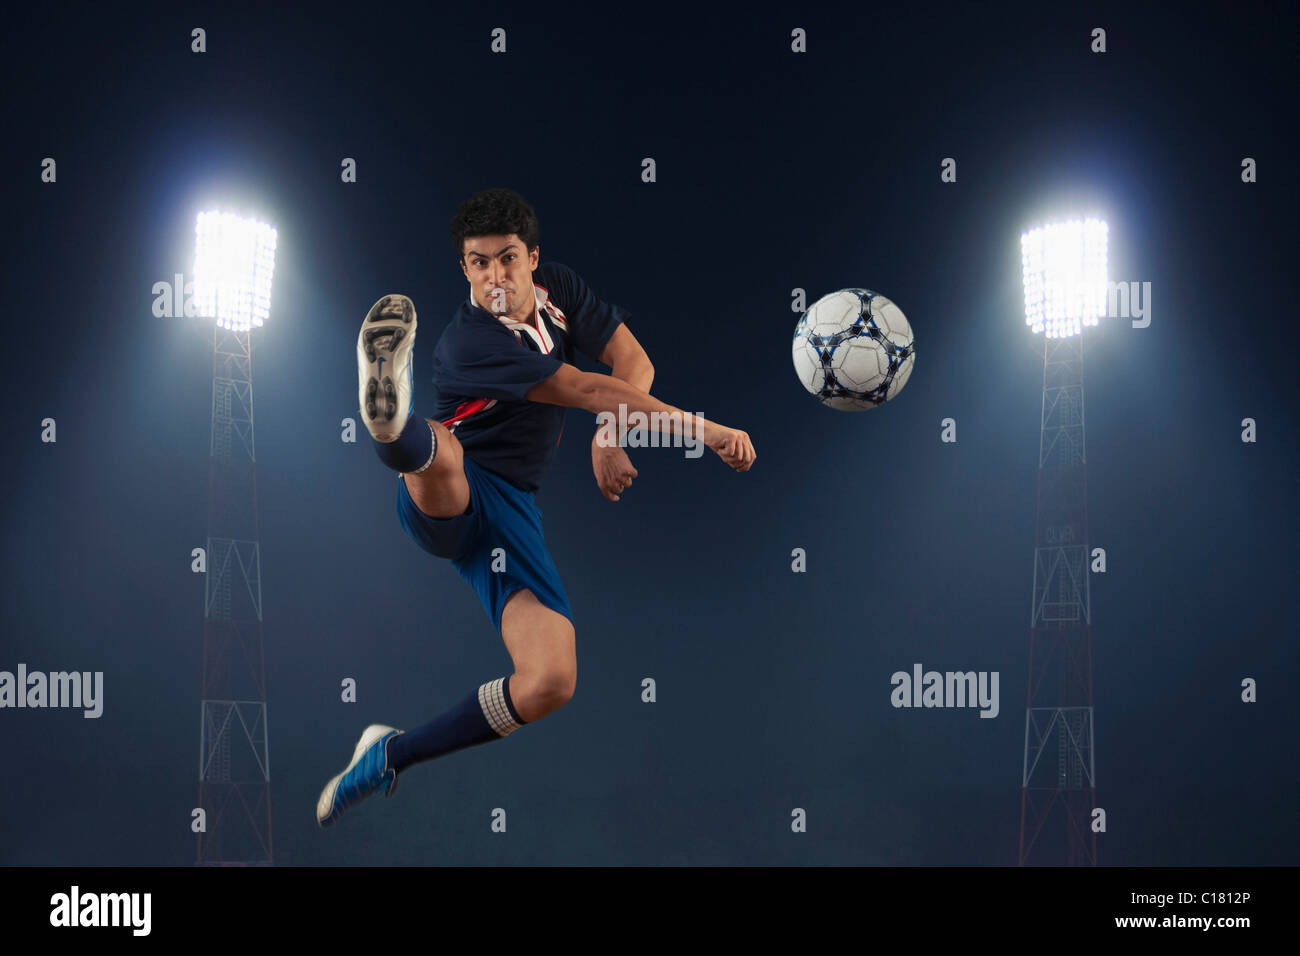 Soccer player kicking a soccer ball Stock Photo